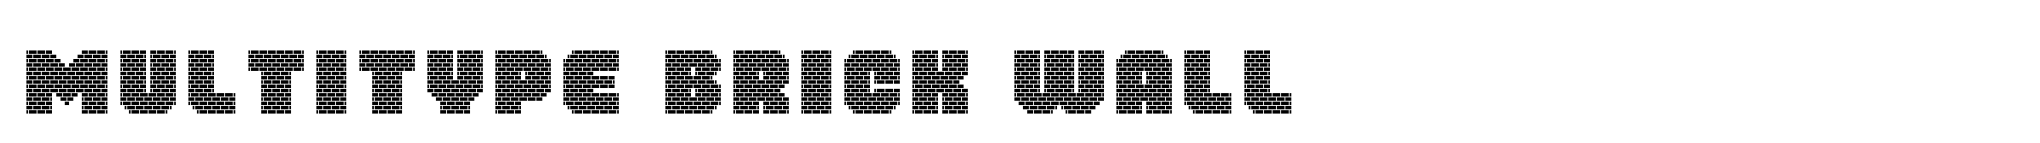 MultiType Brick Wall image